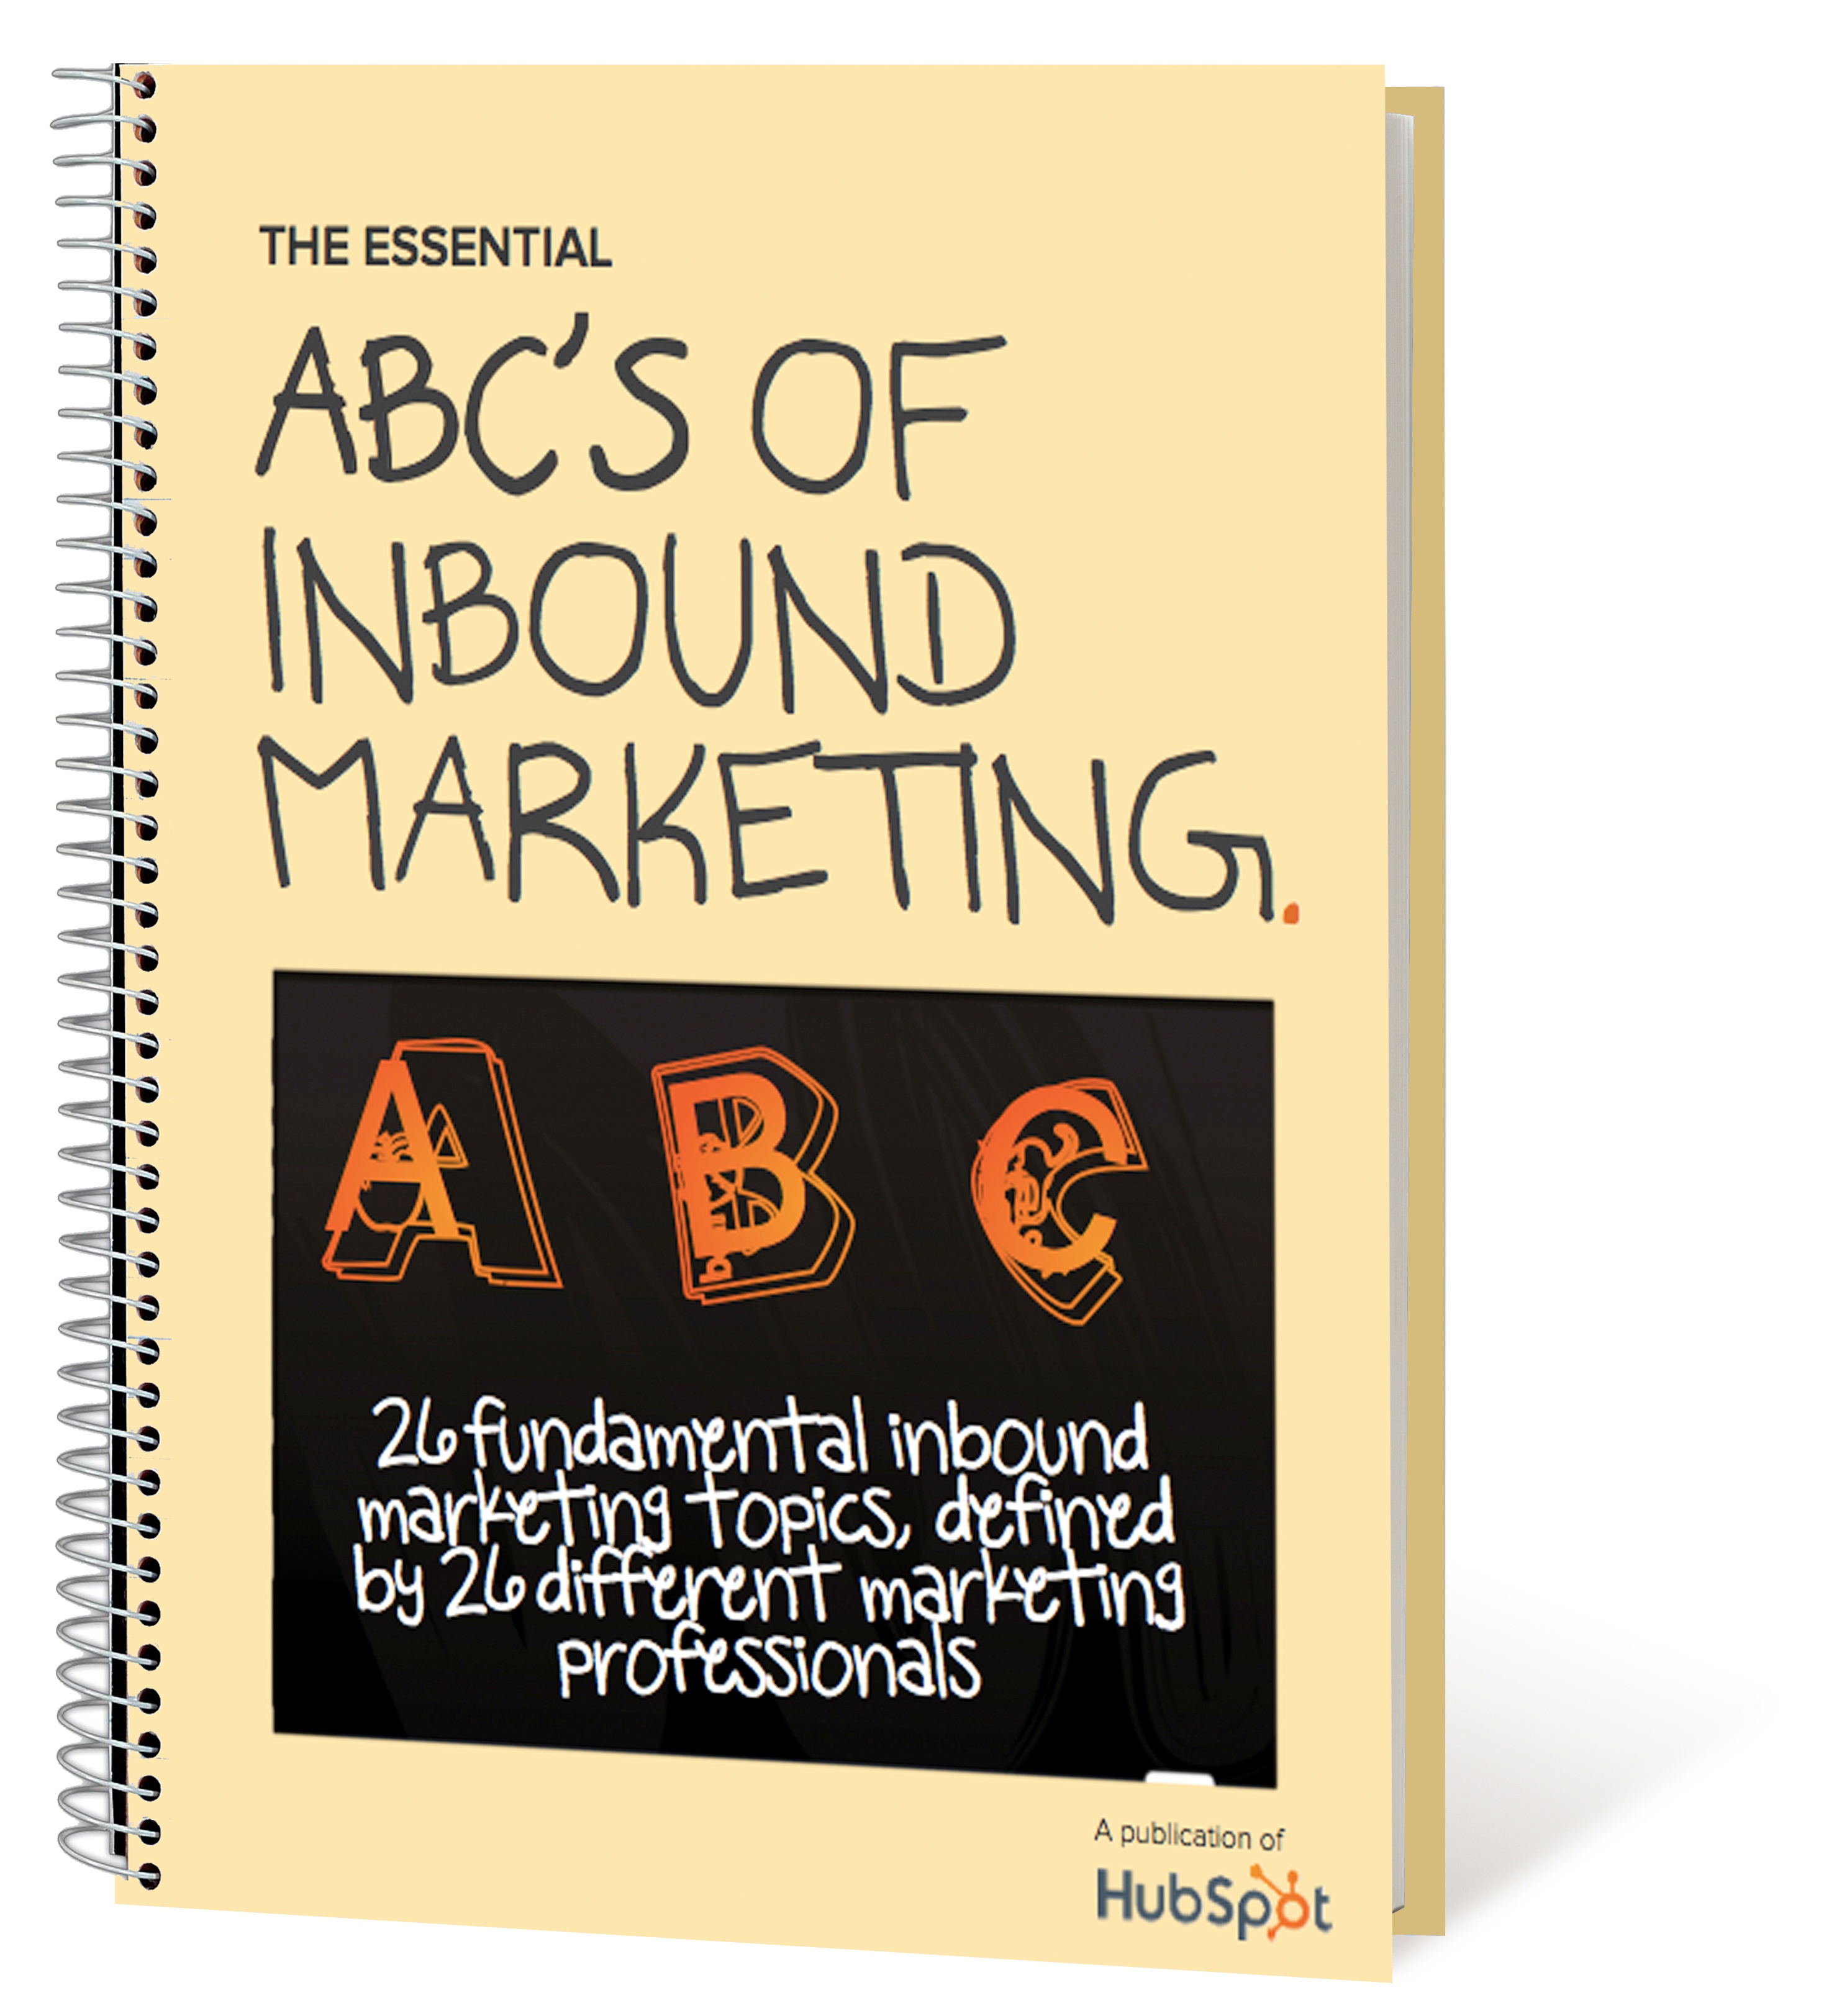 ABCs_of_inbound_marketing thumbnail.jpg